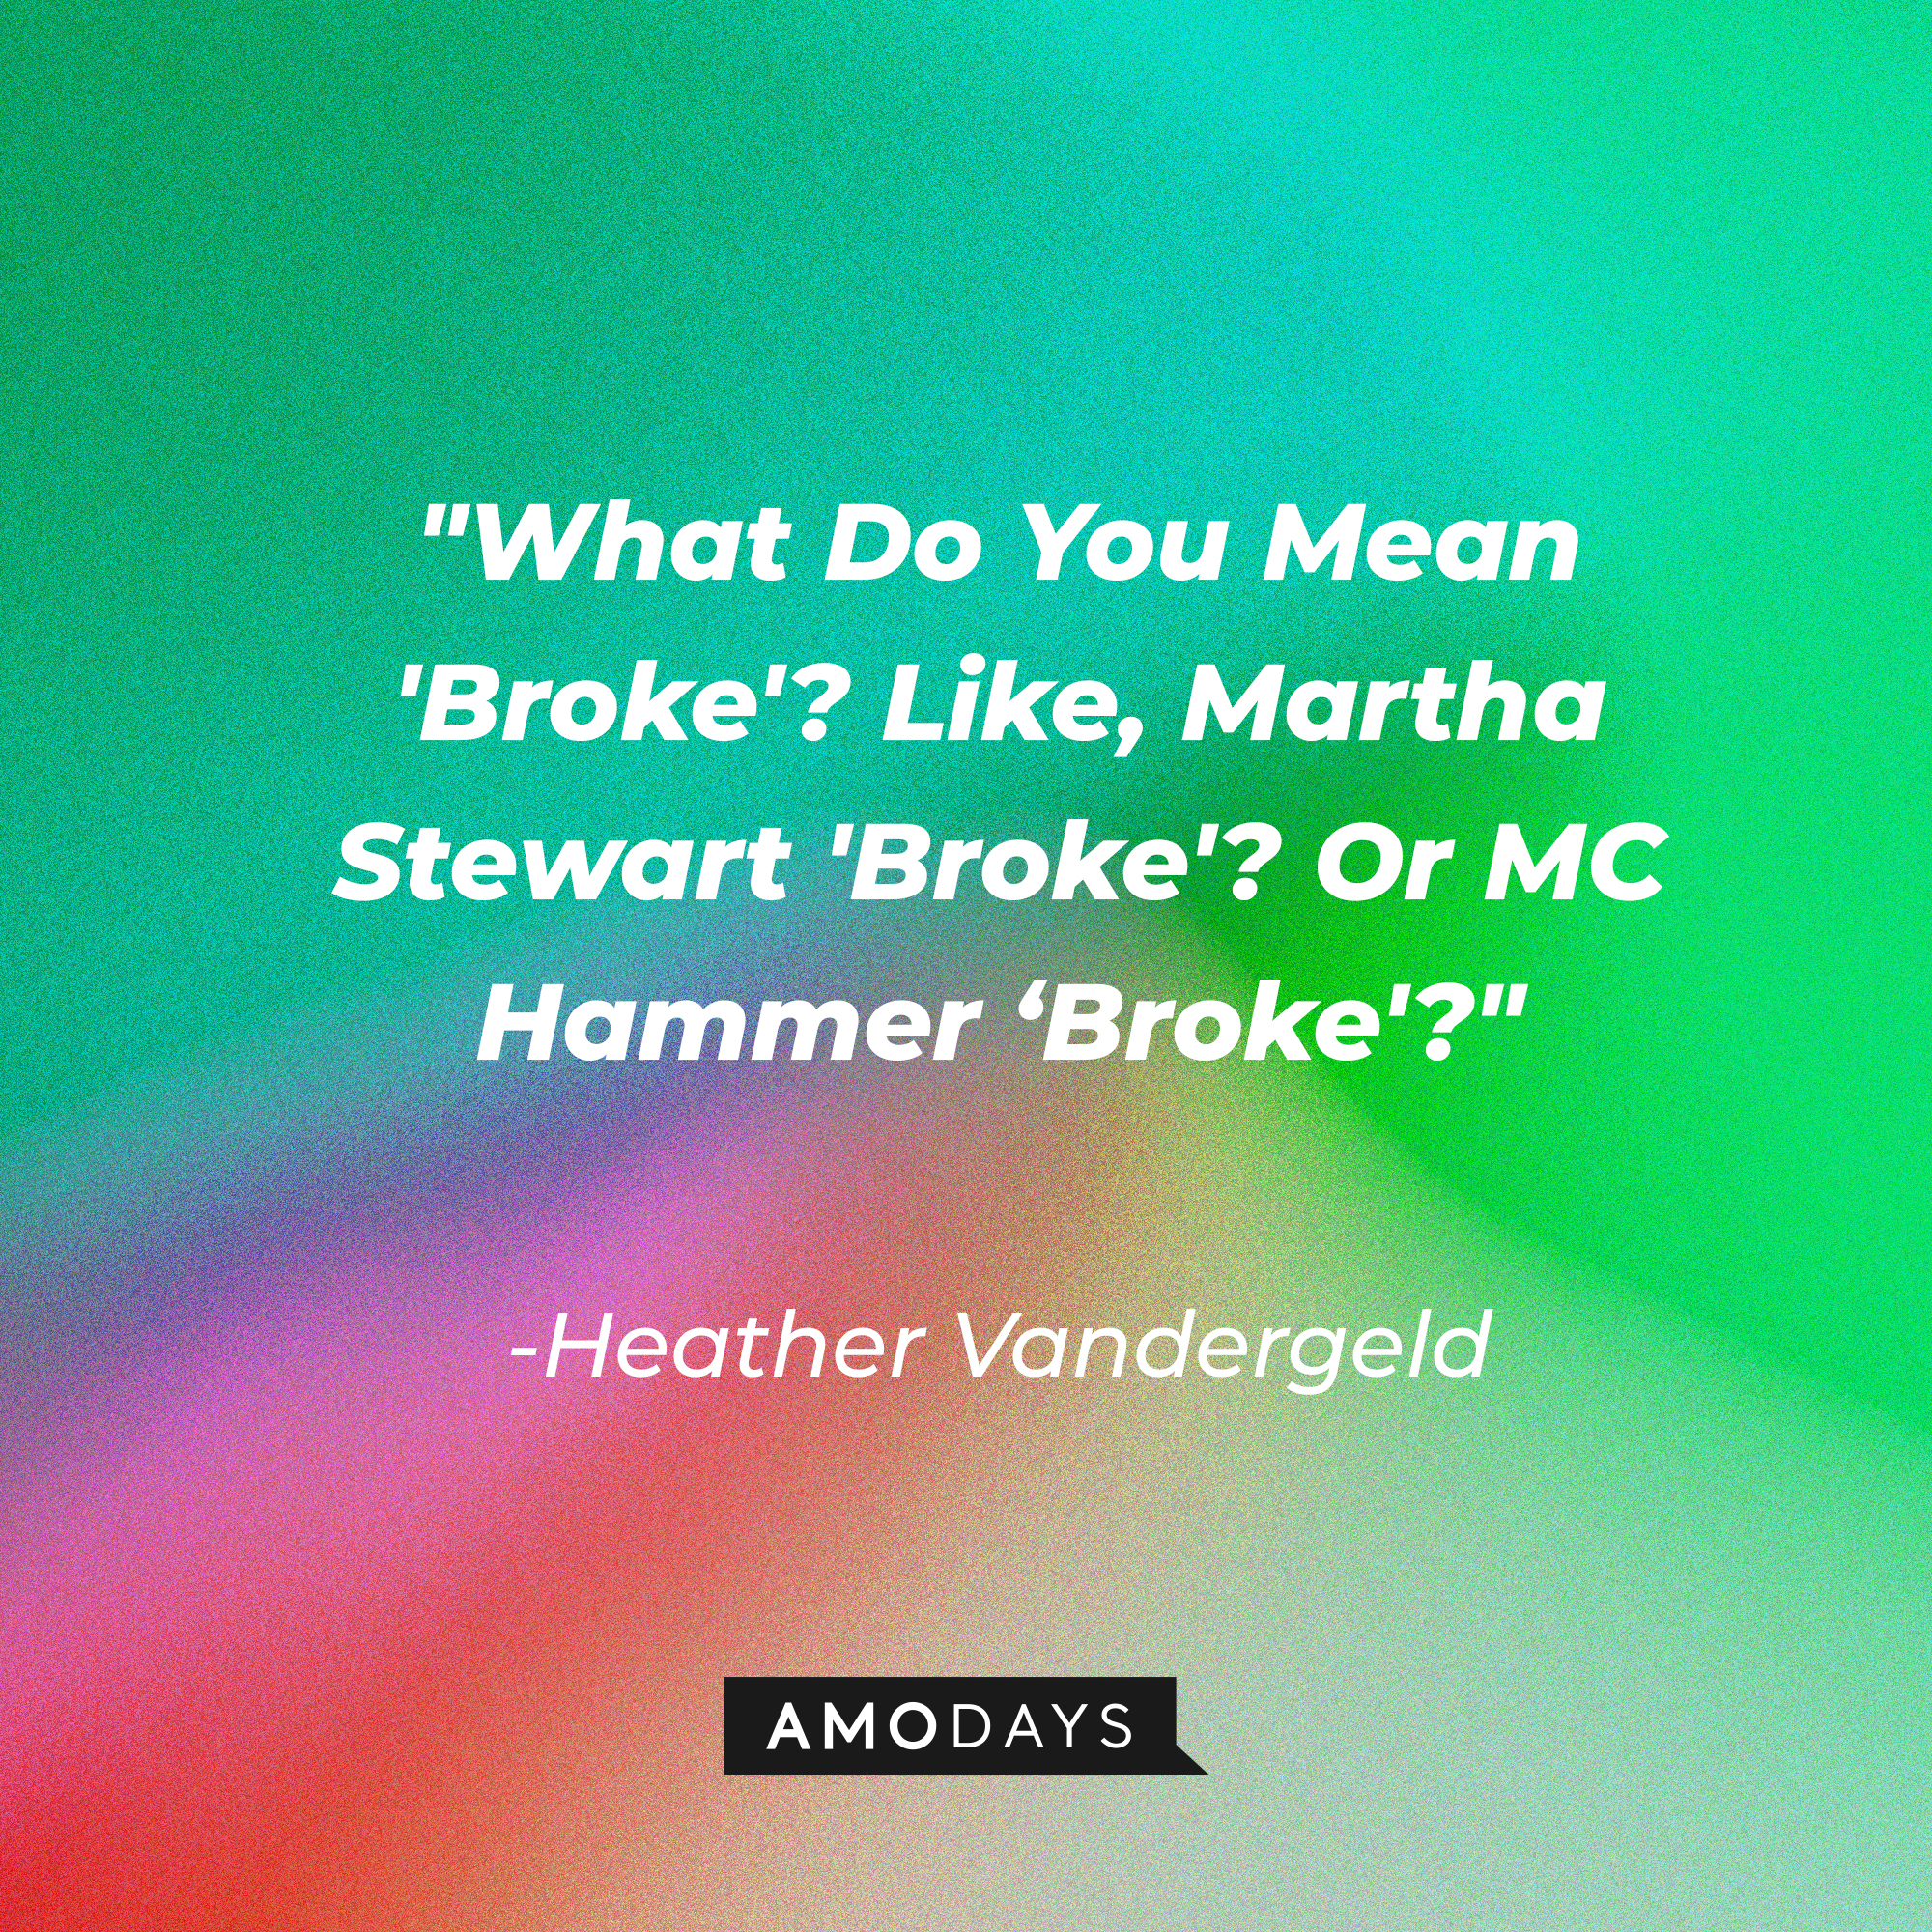 Heather Vandergeld's quote: "What Do You Mean 'Broke'? Like, Martha Stewart 'Broke'? Or MC Hammer 'Broke'?" | Source: Amodays